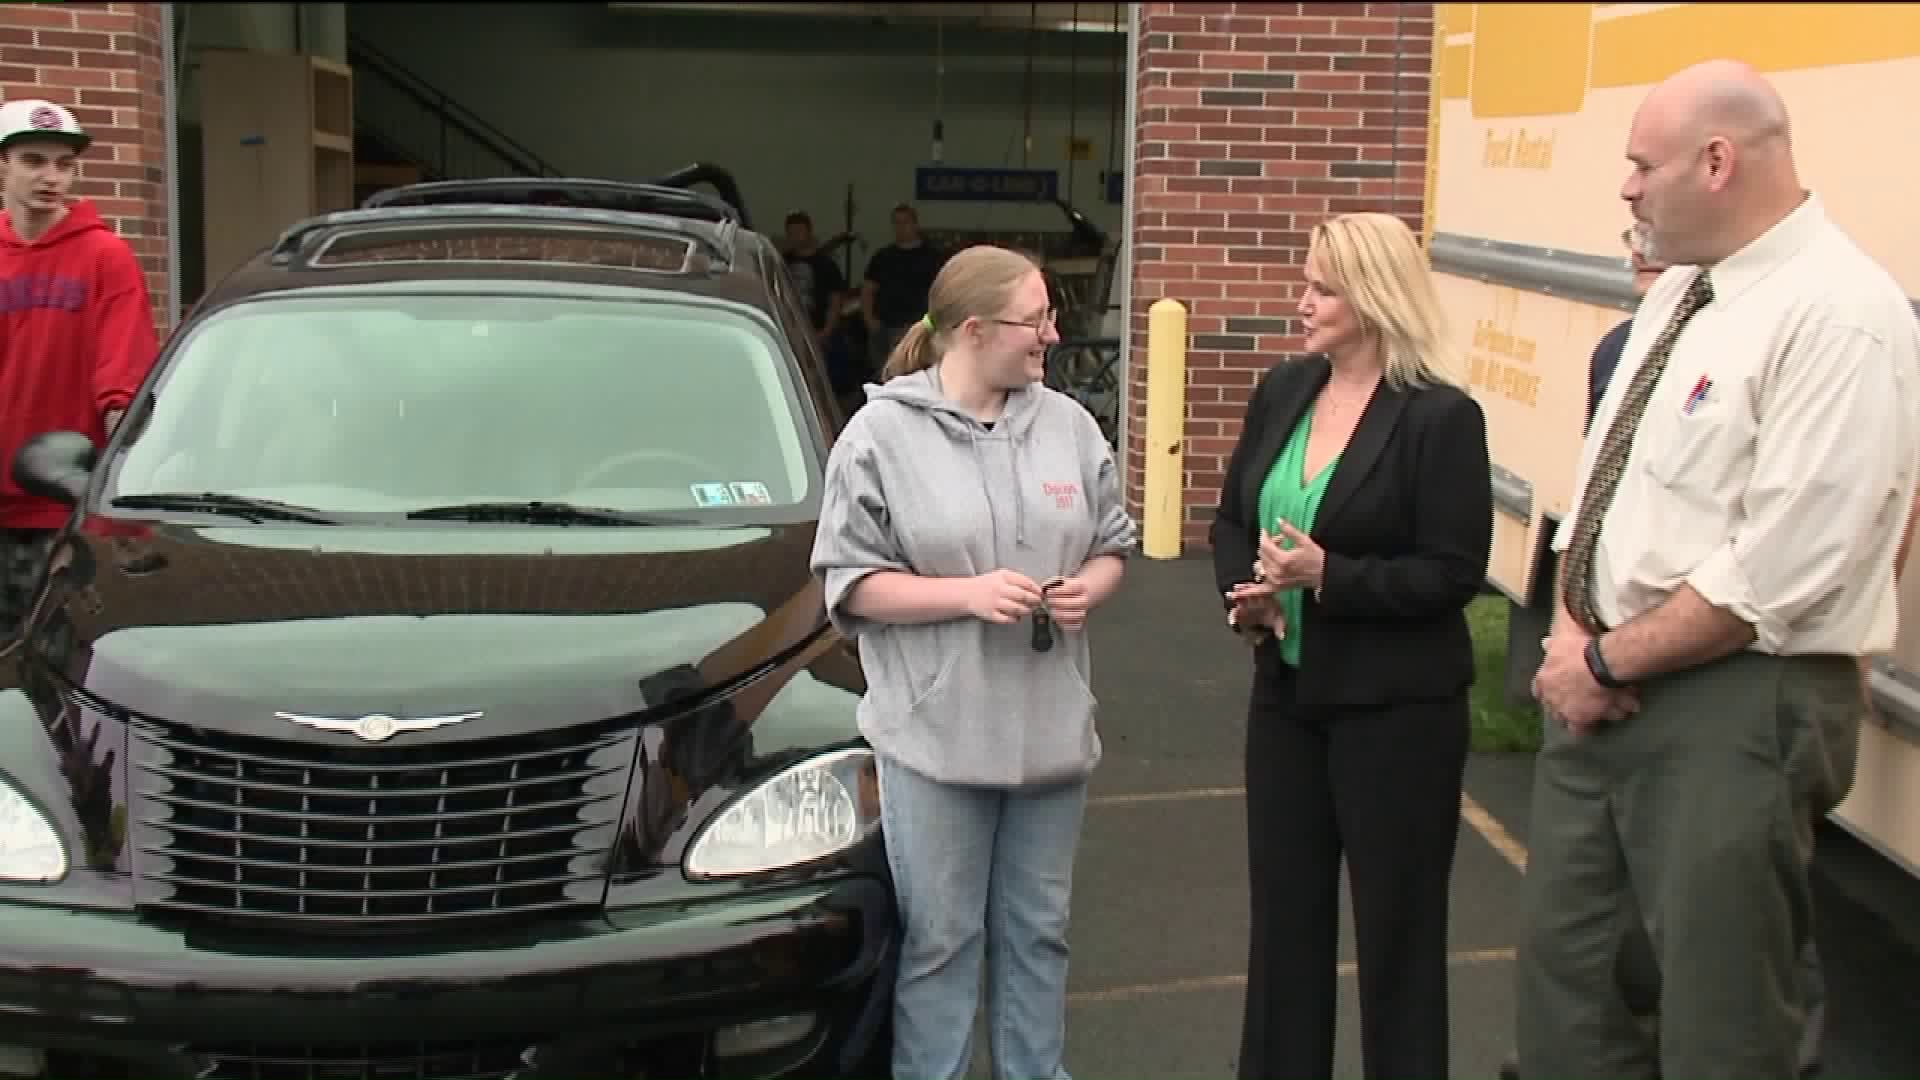 School Fixes, Donates Car to Student